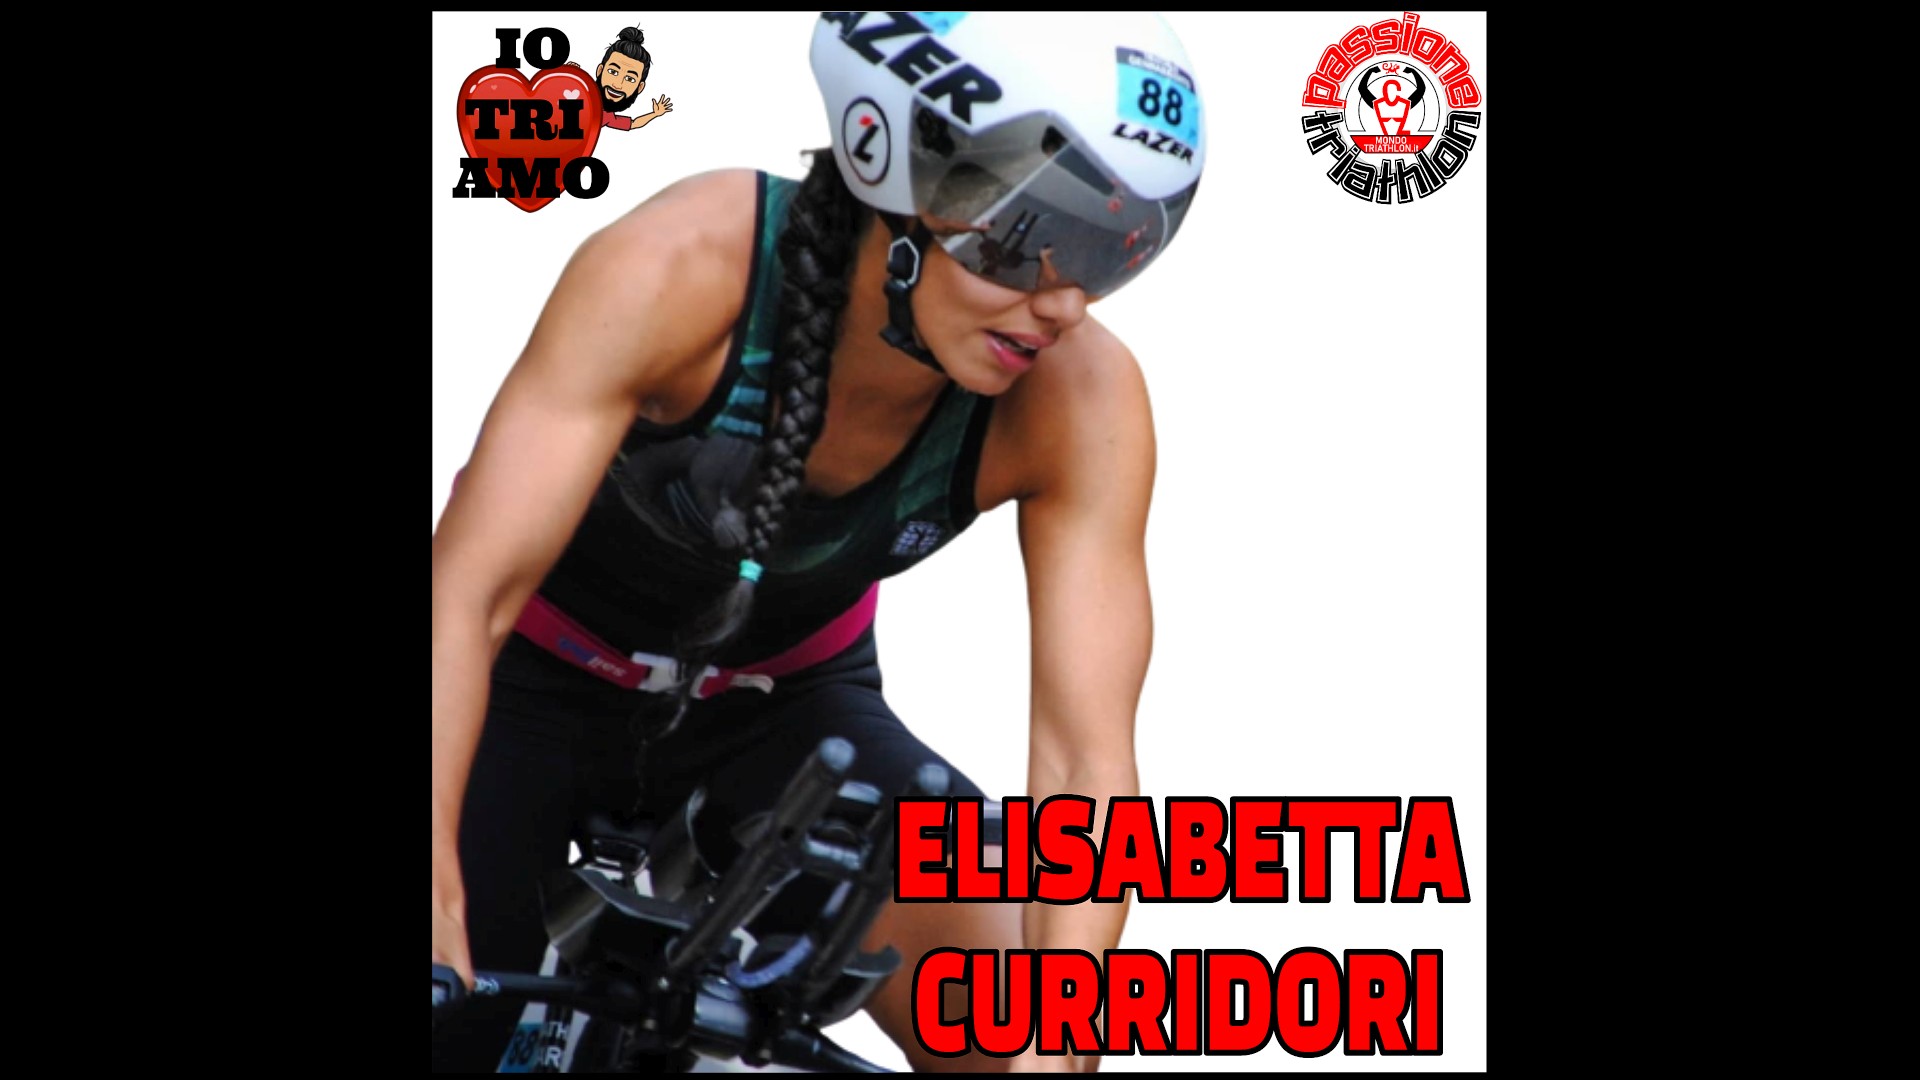 Elisabetta Curridori Passione Triathlon n° 106